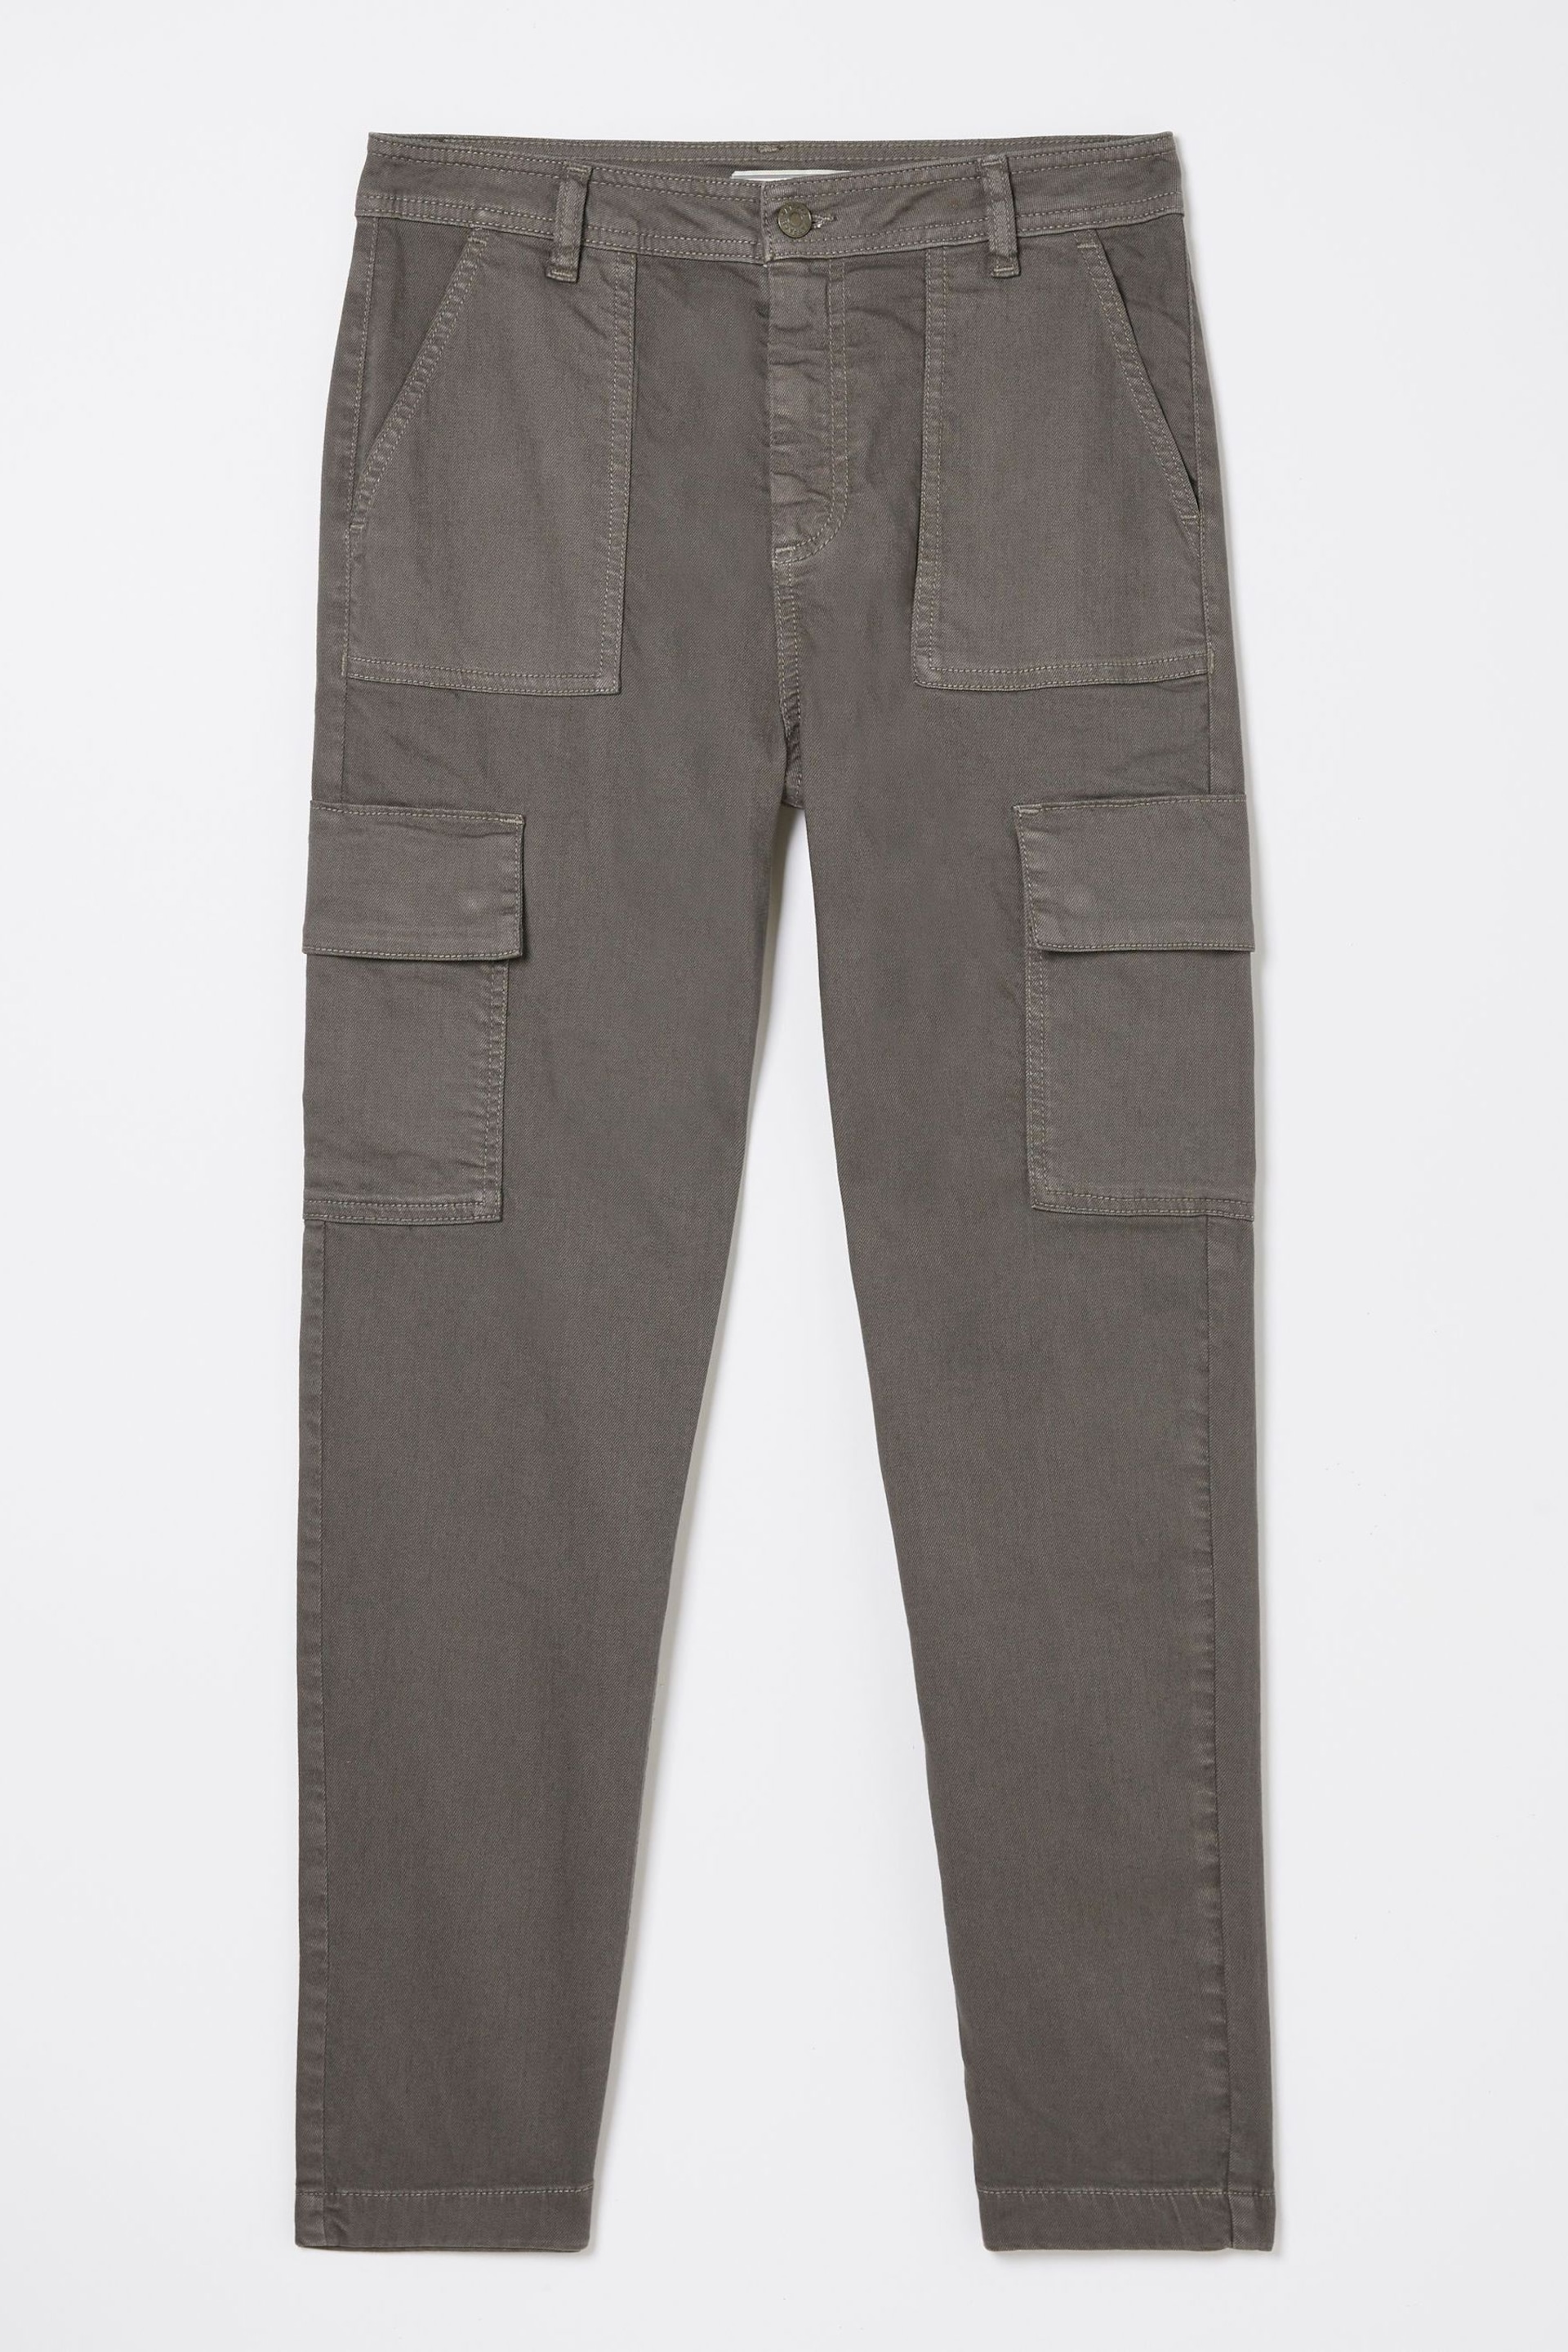 FatFace Grey Aspen Cargo Chino Trousers - Image 5 of 5